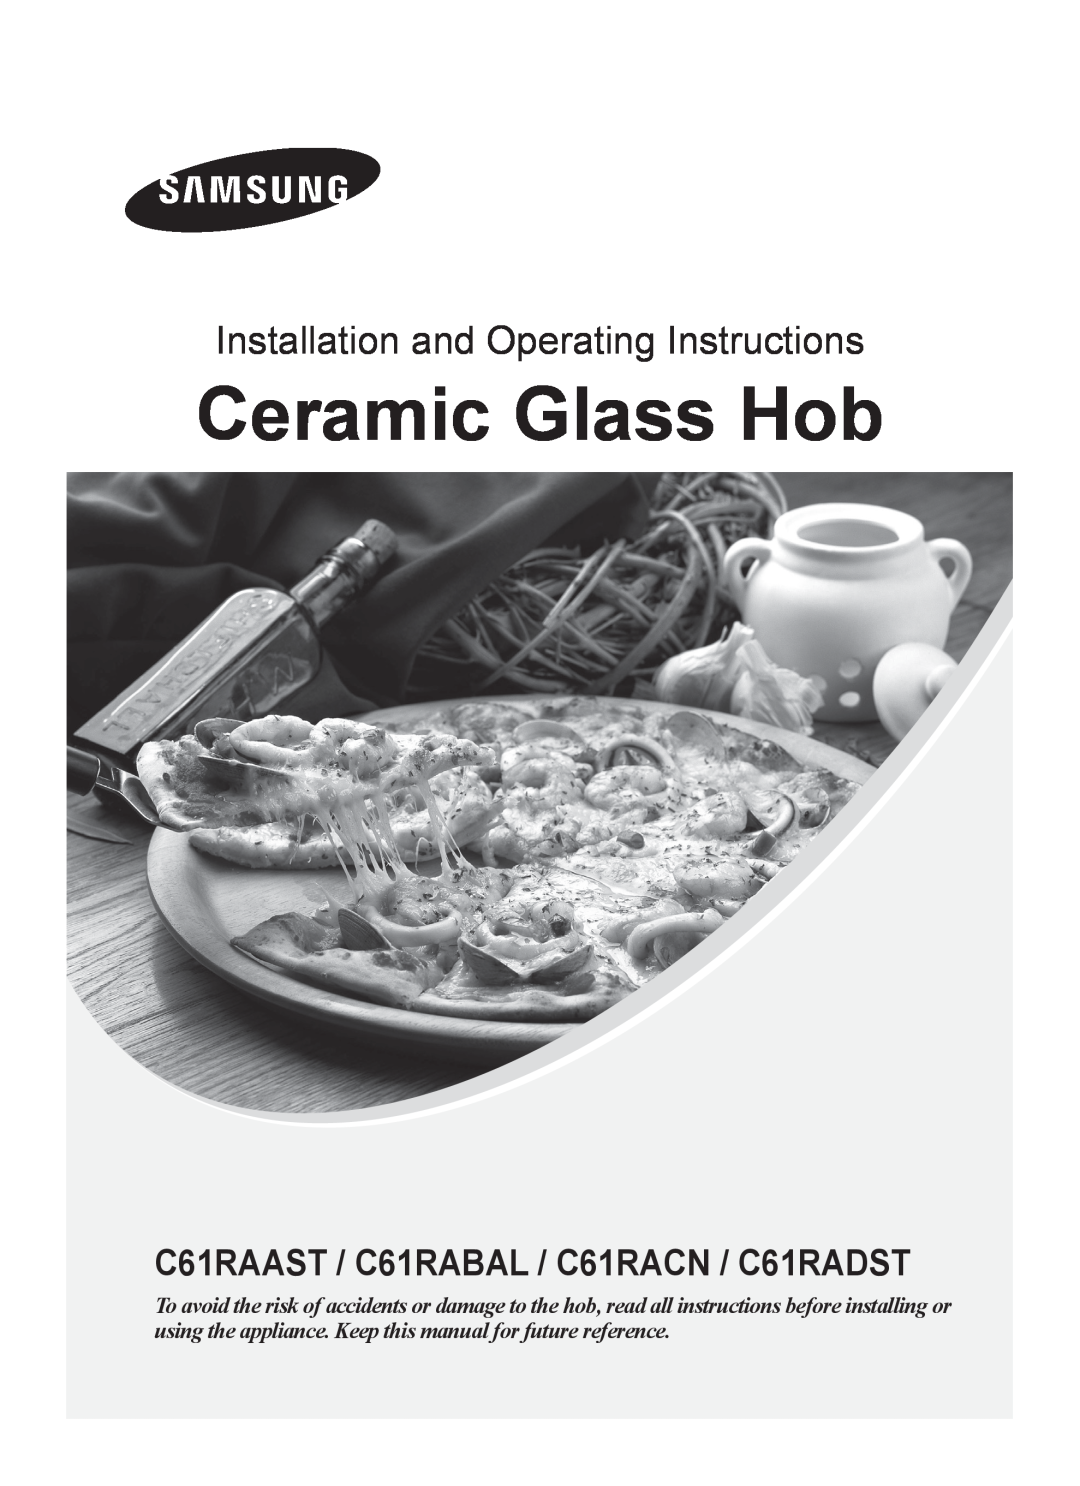 Samsung C61RABAL, C61RACN, C61RAAST, C61RADST manual Ceramic Glass Hob, Installation and Operating Instructions 